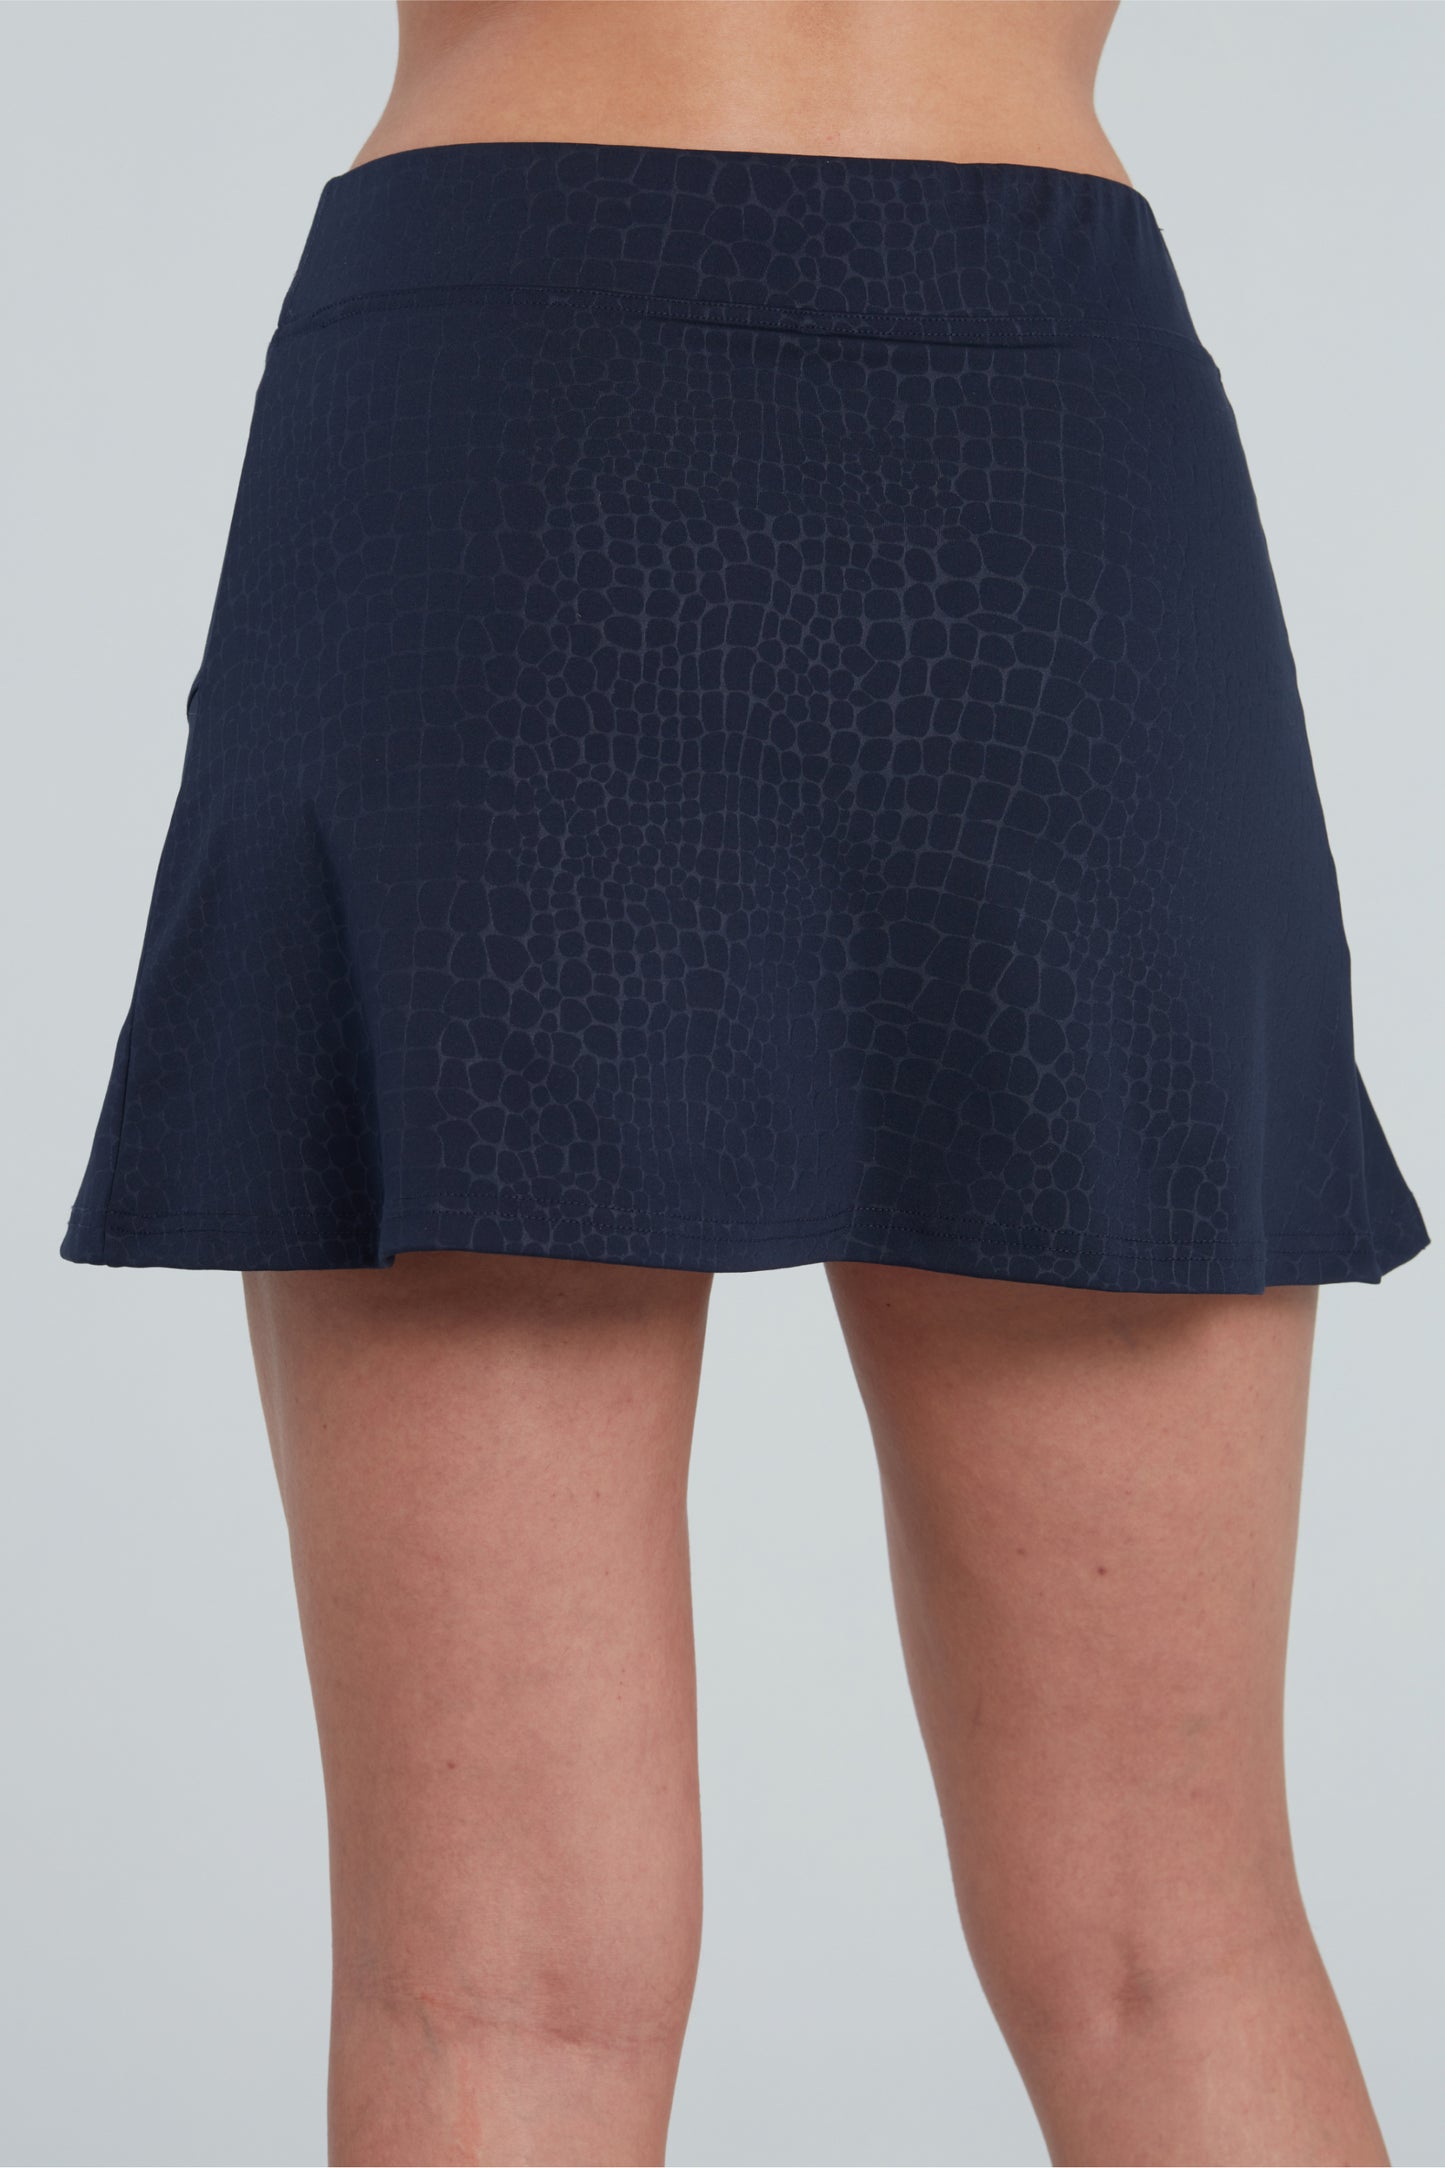 Southampton Navy Blue Tennis Skirt (Croc Print)